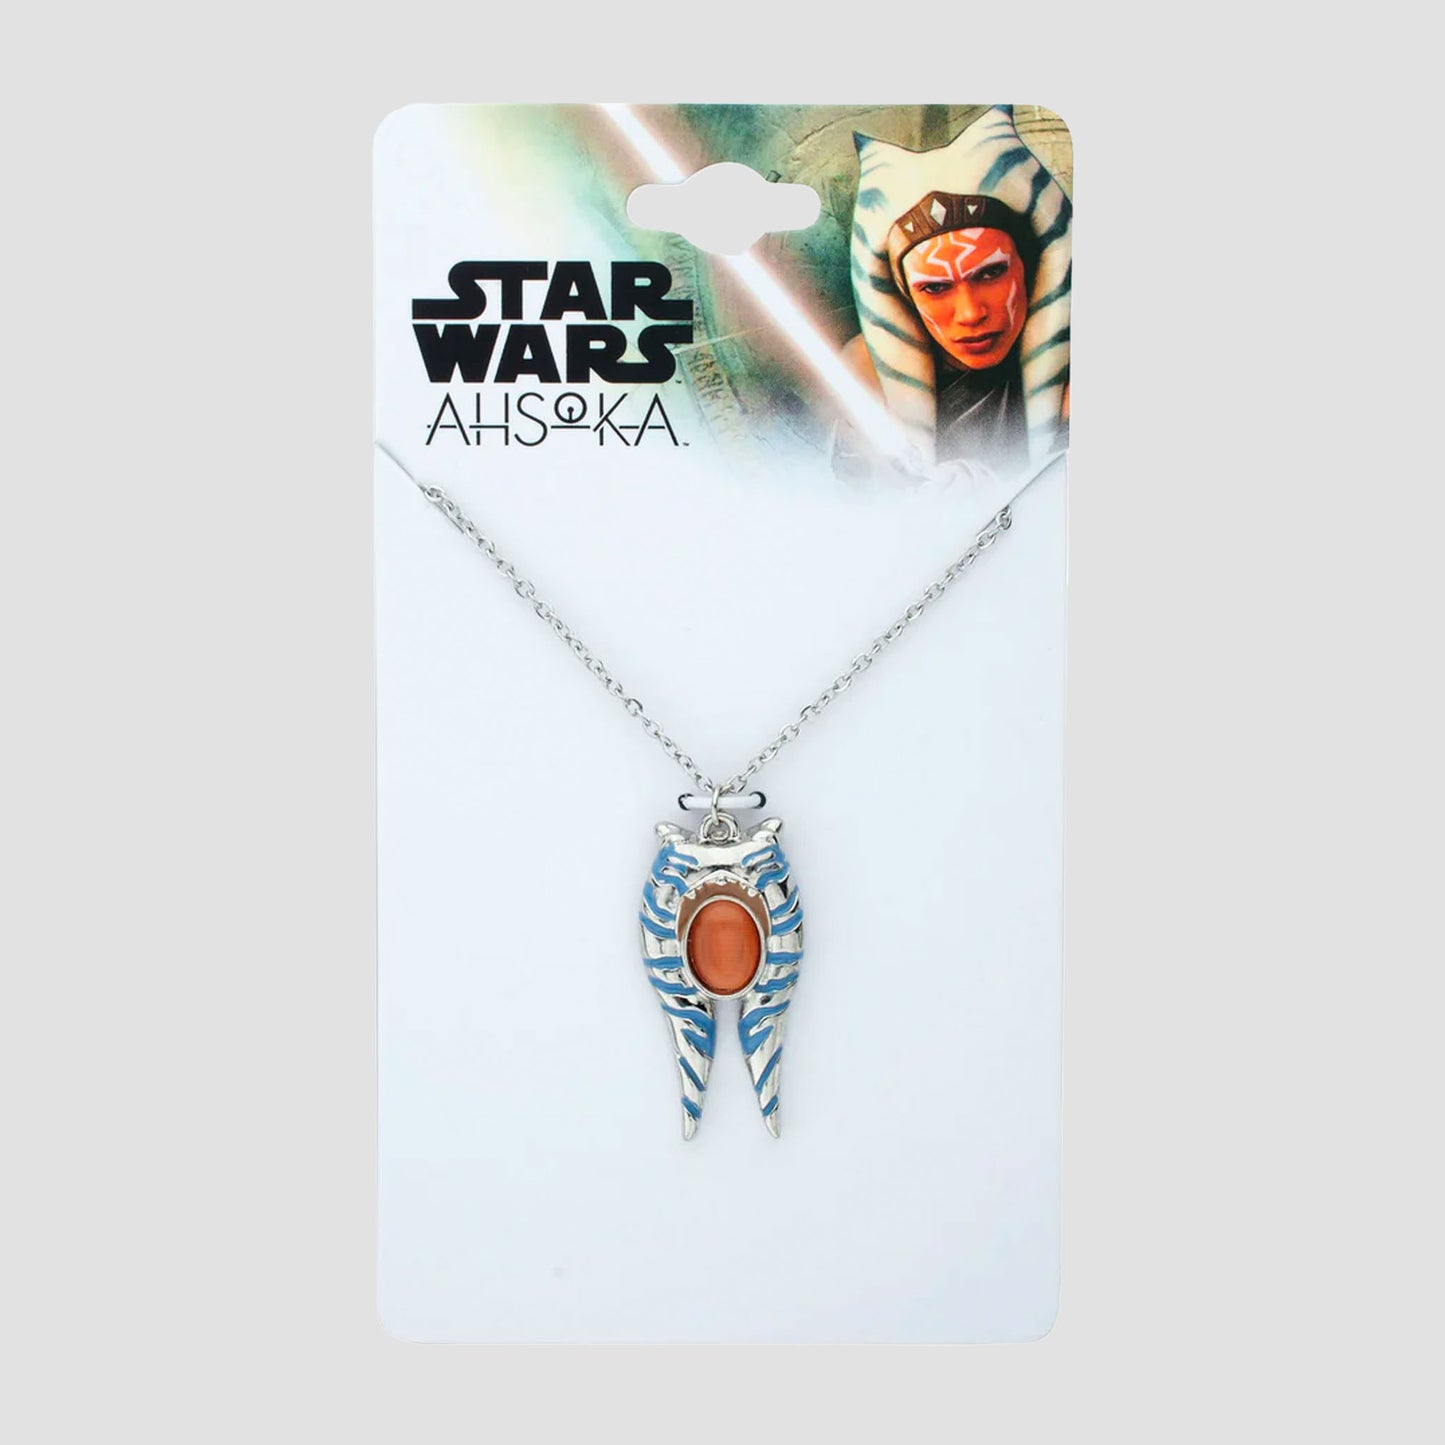 Ahsoka's Lekku Star Wars Pendant Necklace